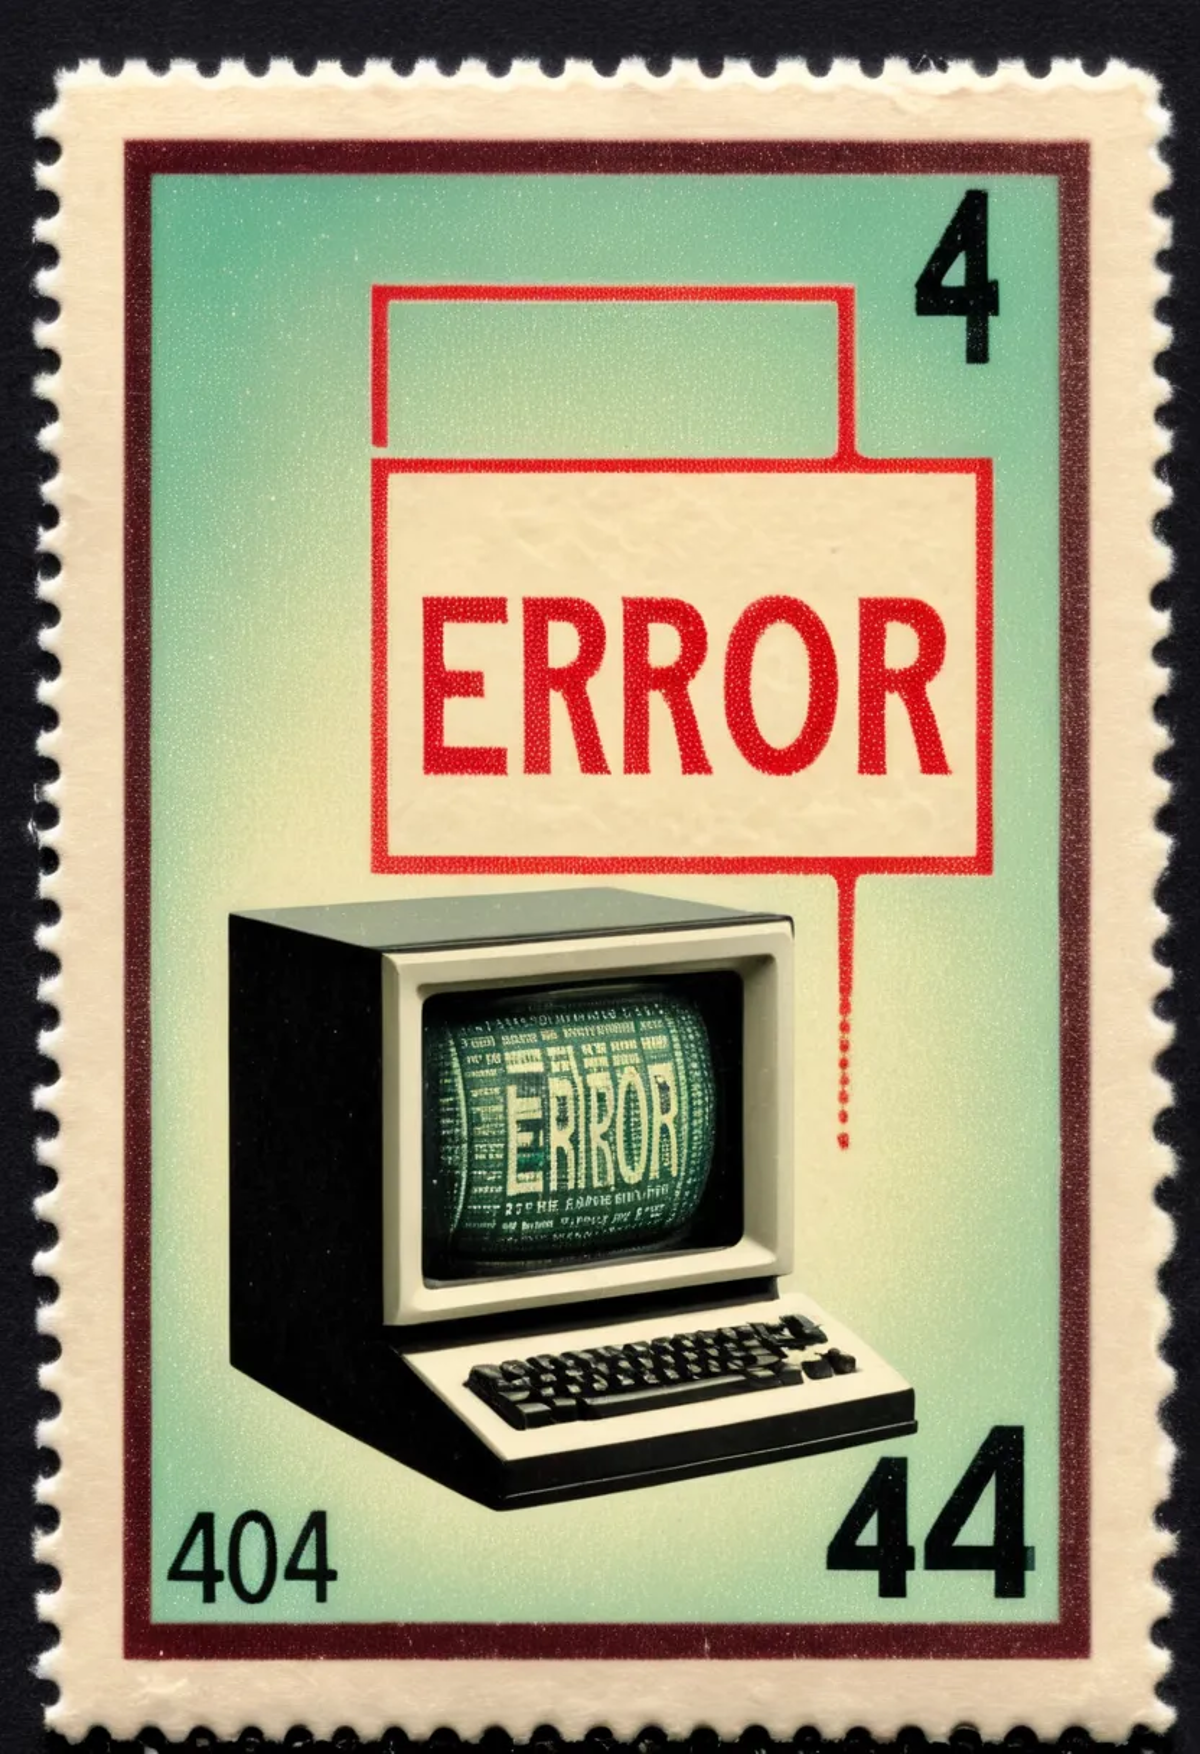 A vintage computer error sticker on a postage stamp.